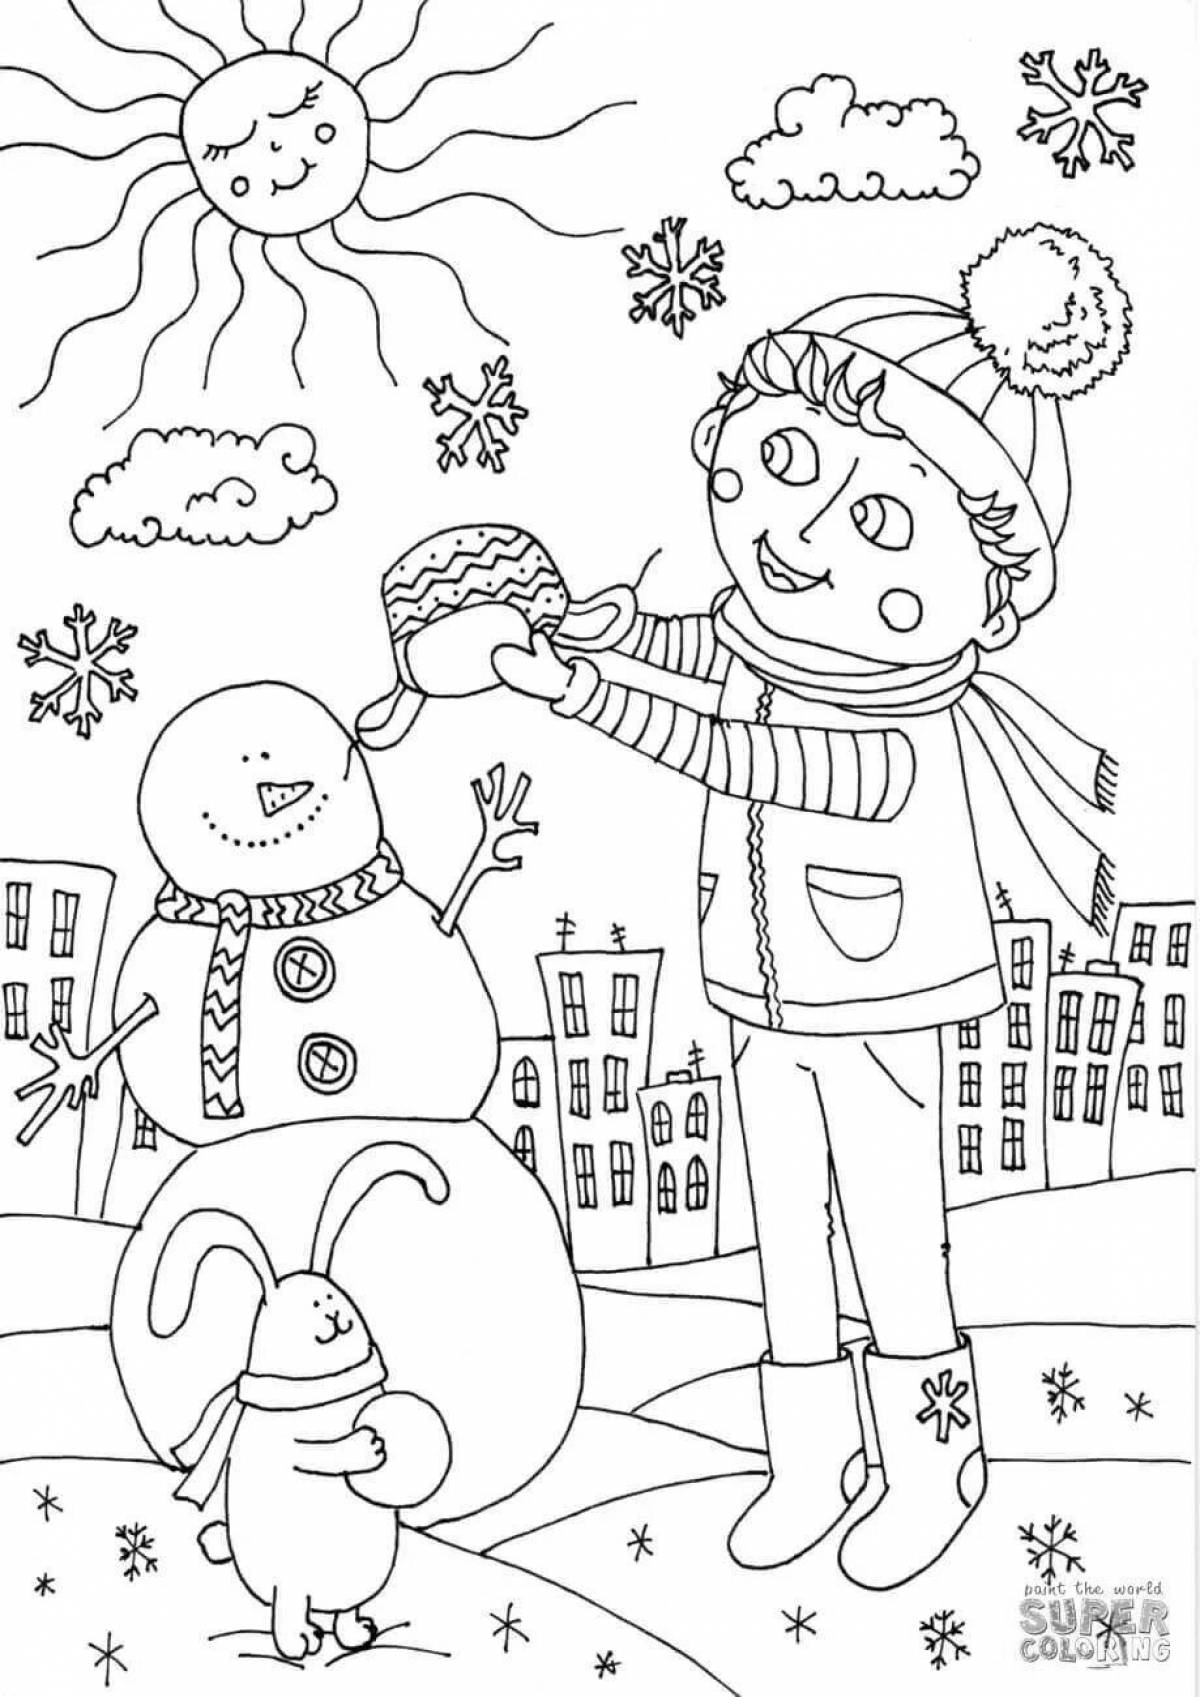 Soulful December coloring book for kids